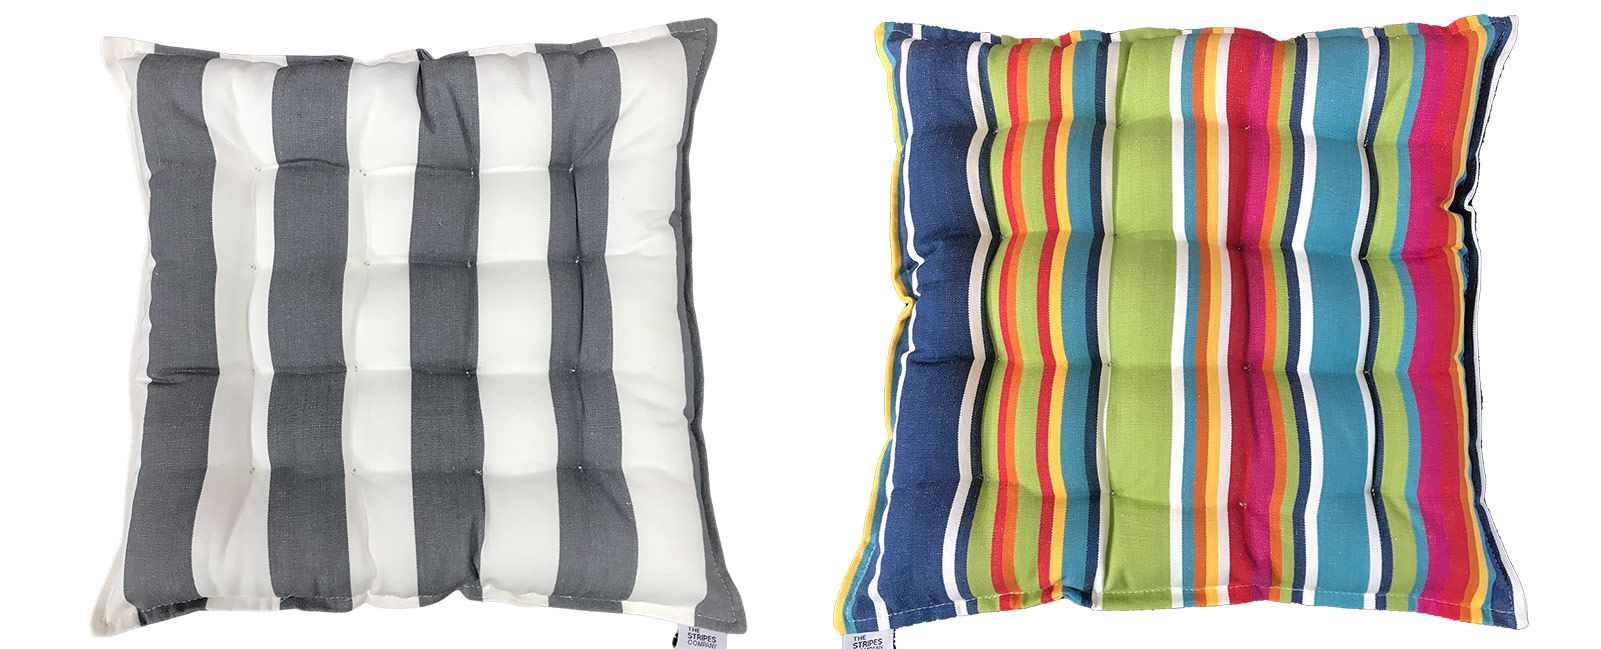 Stripe Seat Pads | Seat Pad Cushions